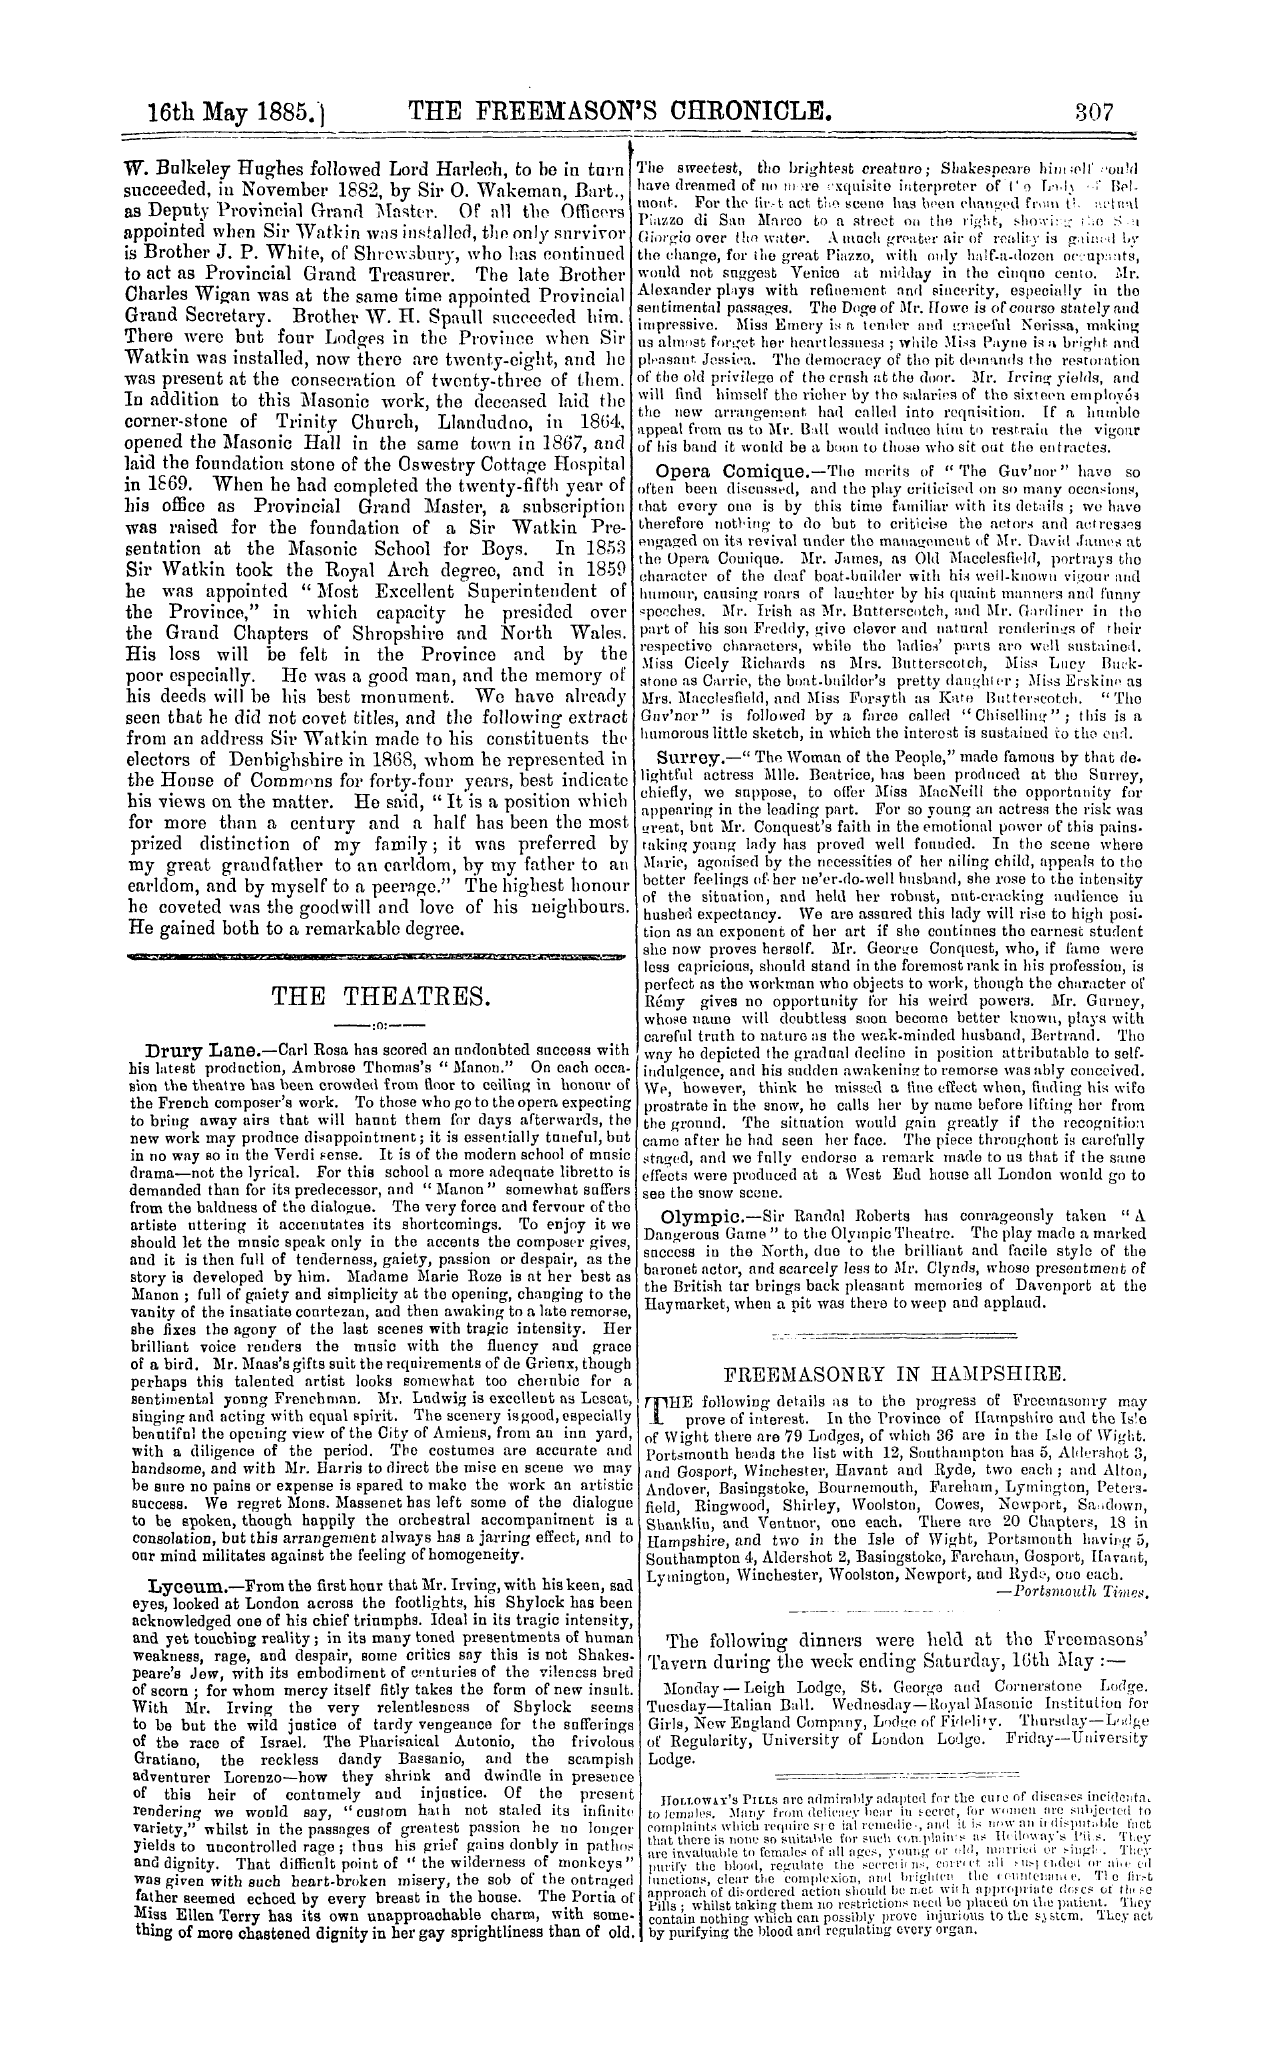 The Freemason's Chronicle: 1885-05-16 - Obituary.